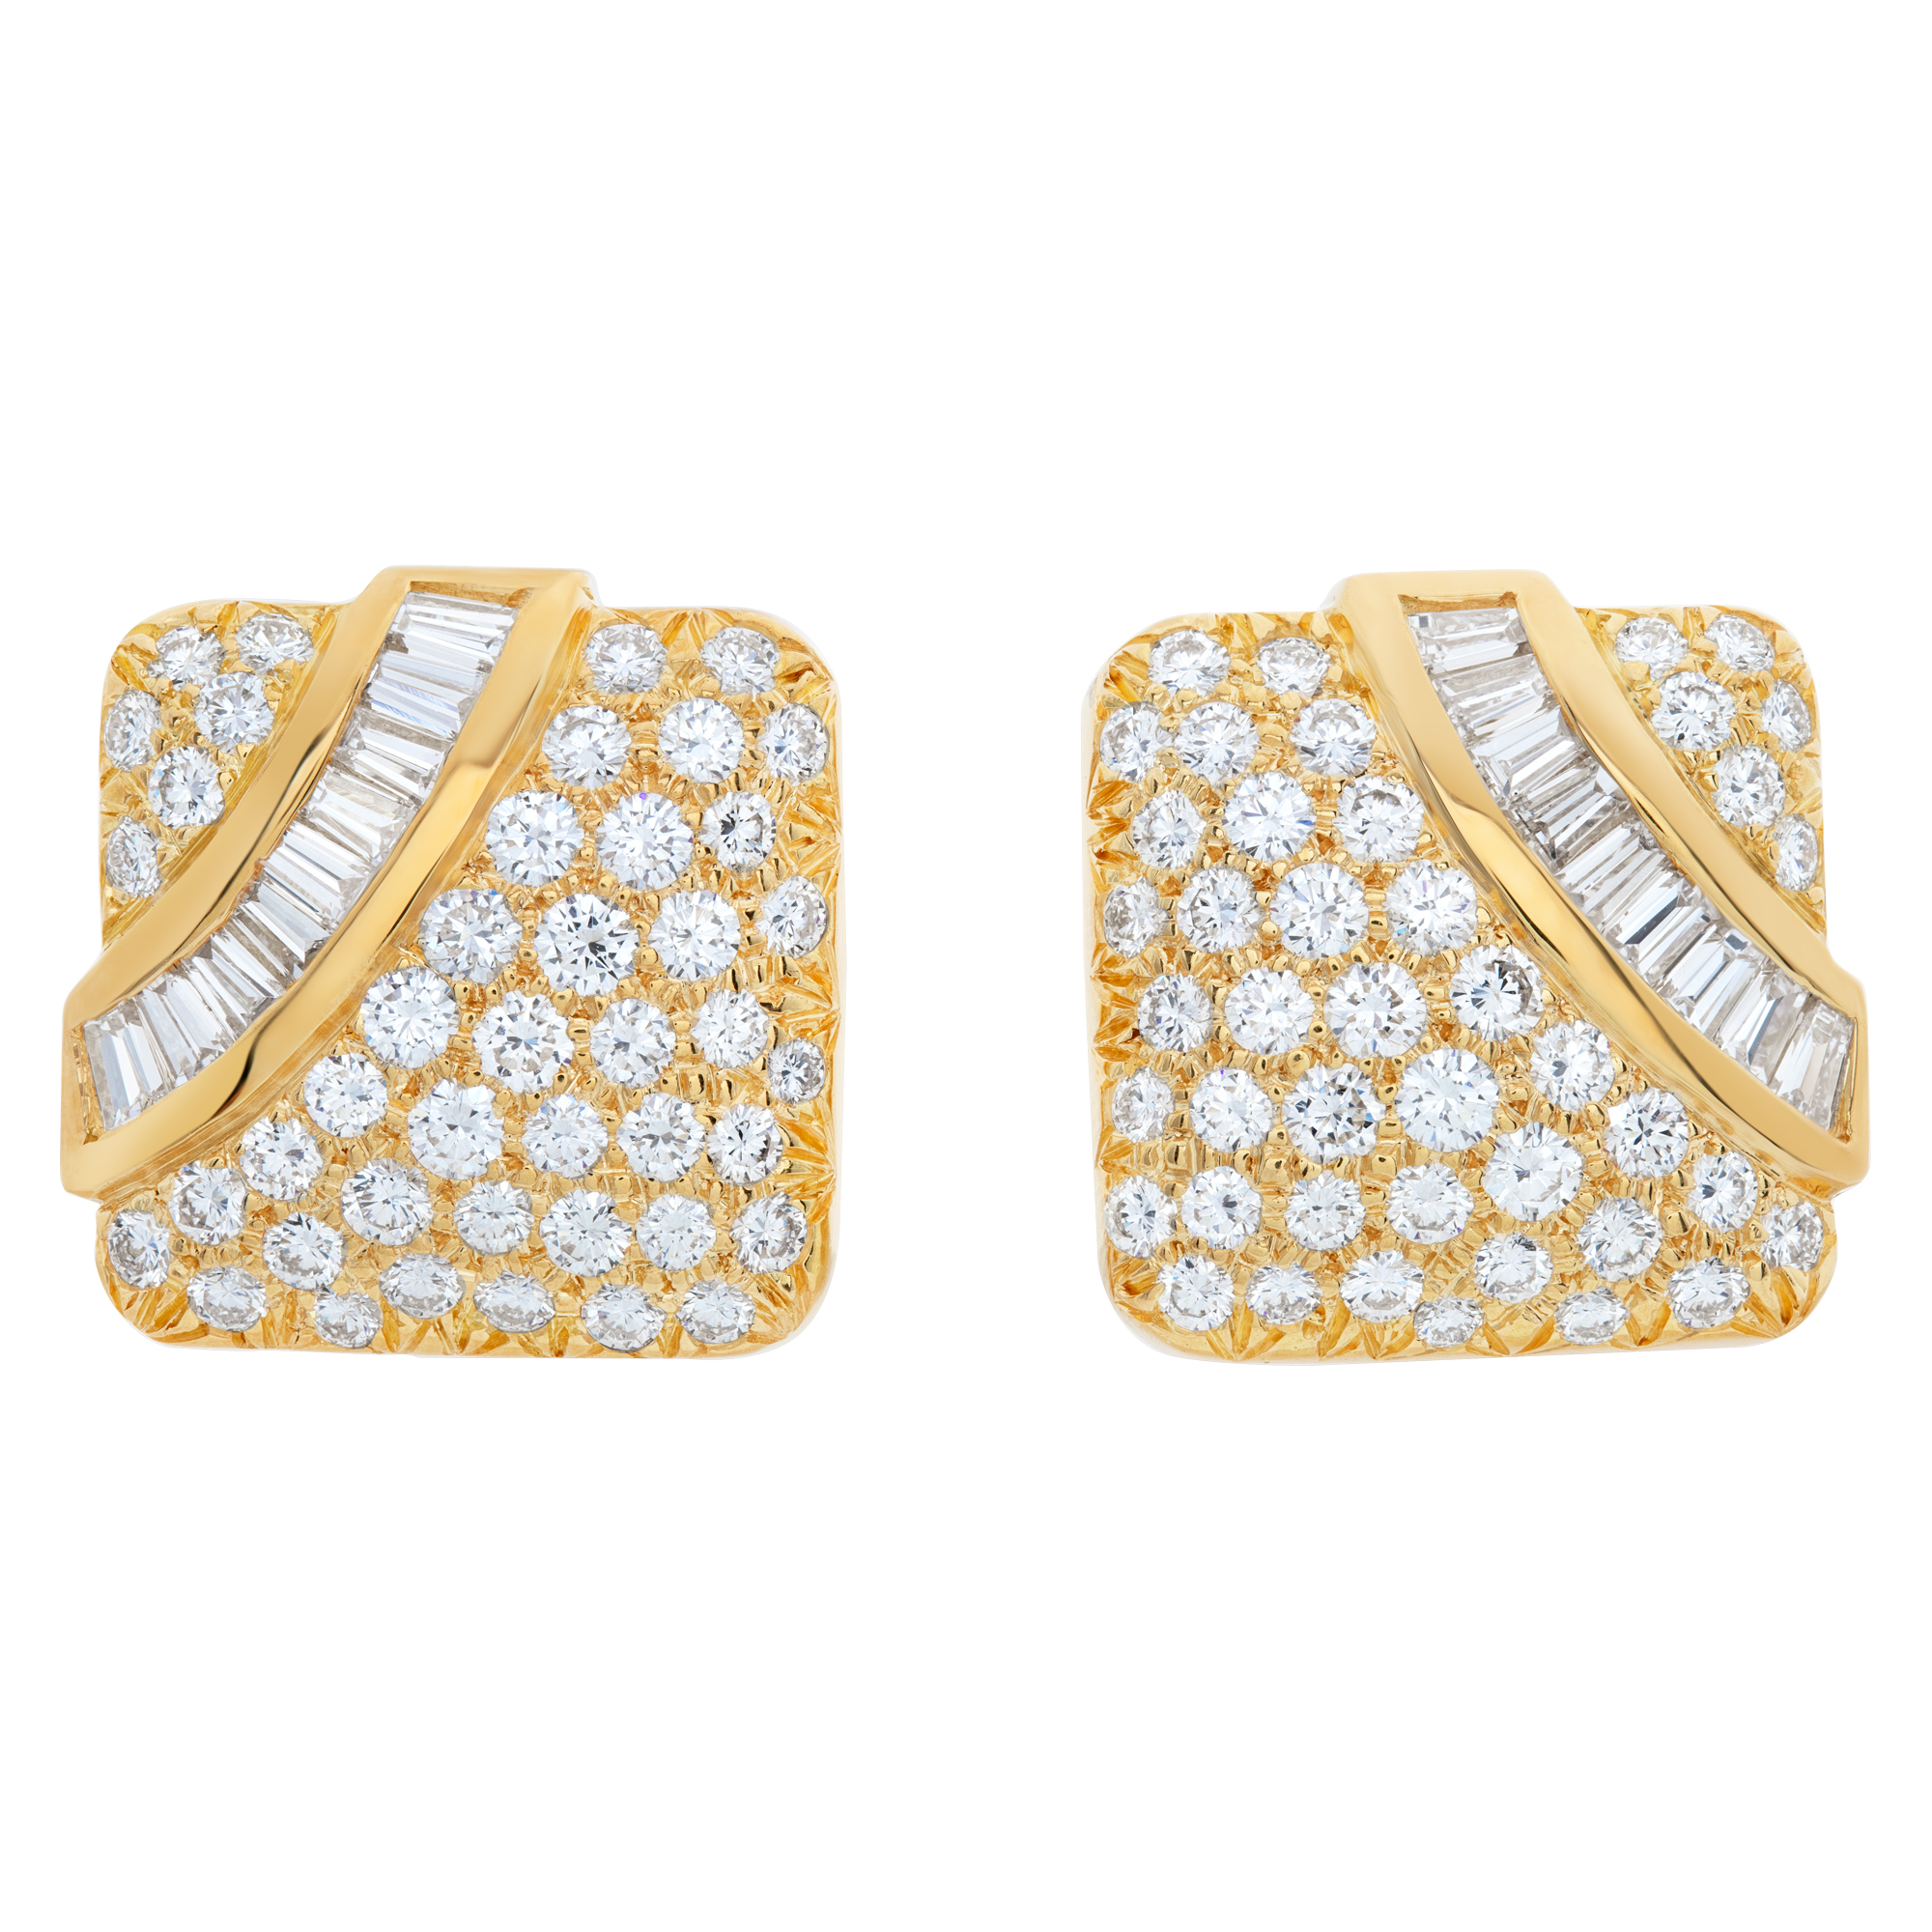 Square diamond clip on earrings in 18k